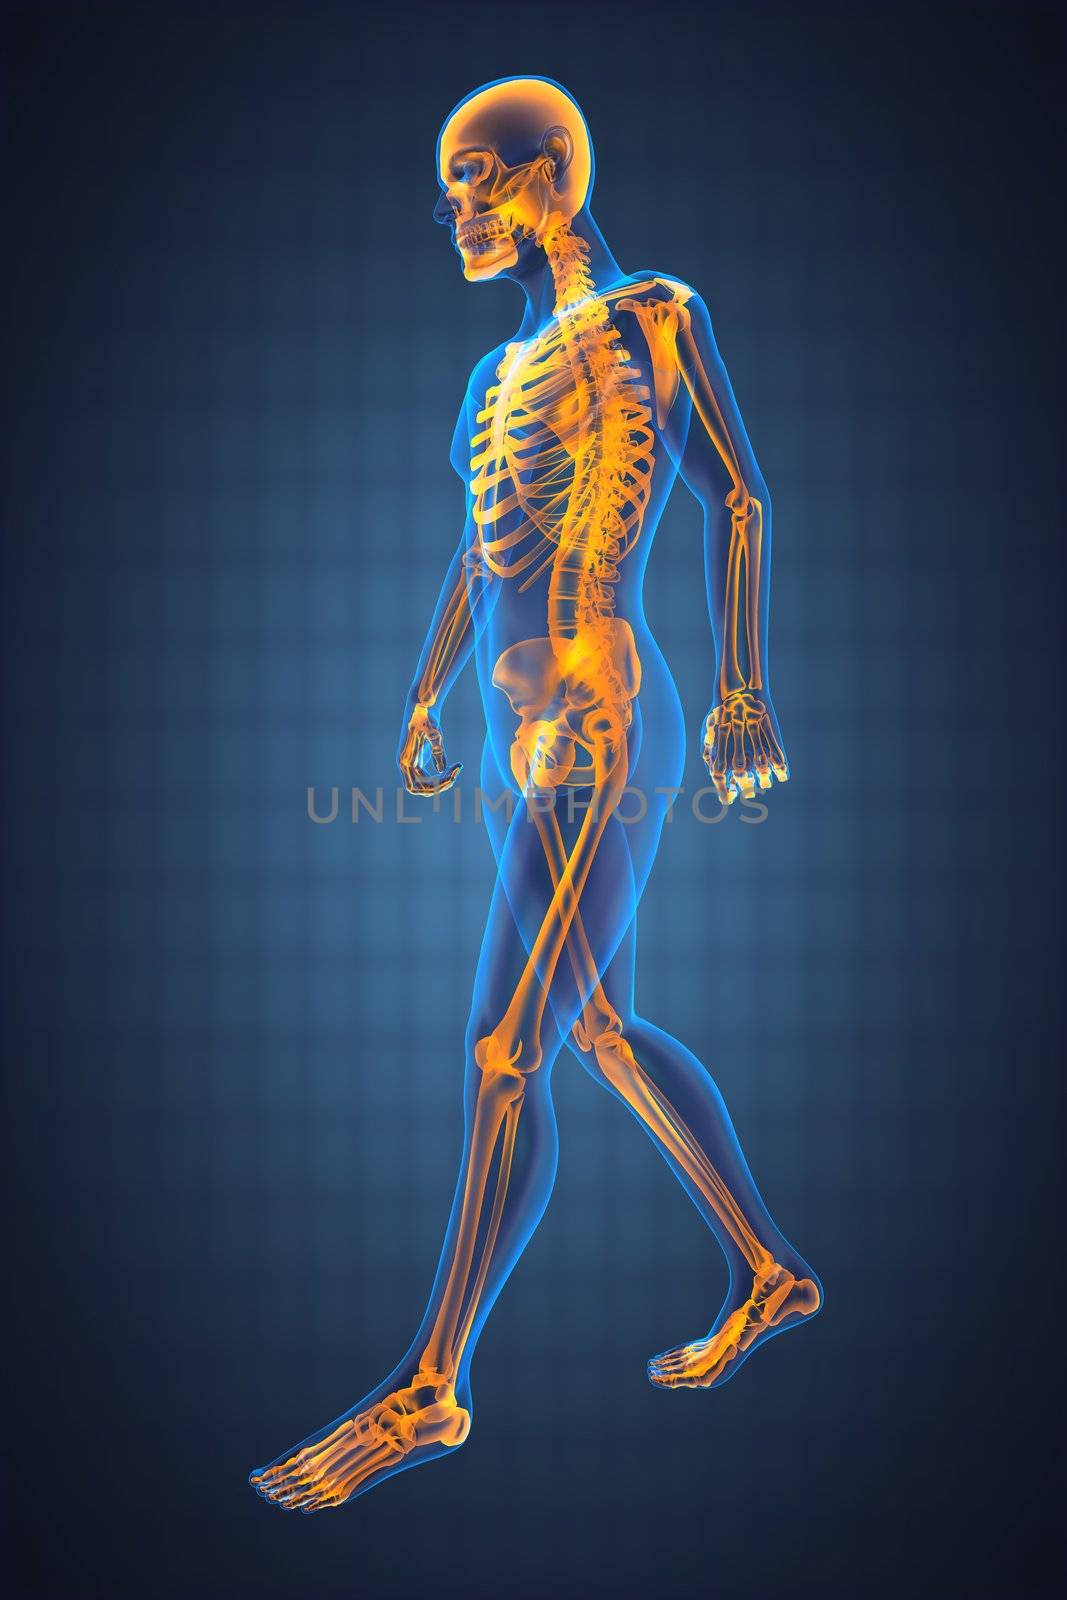 walking man radiography by videodoctor